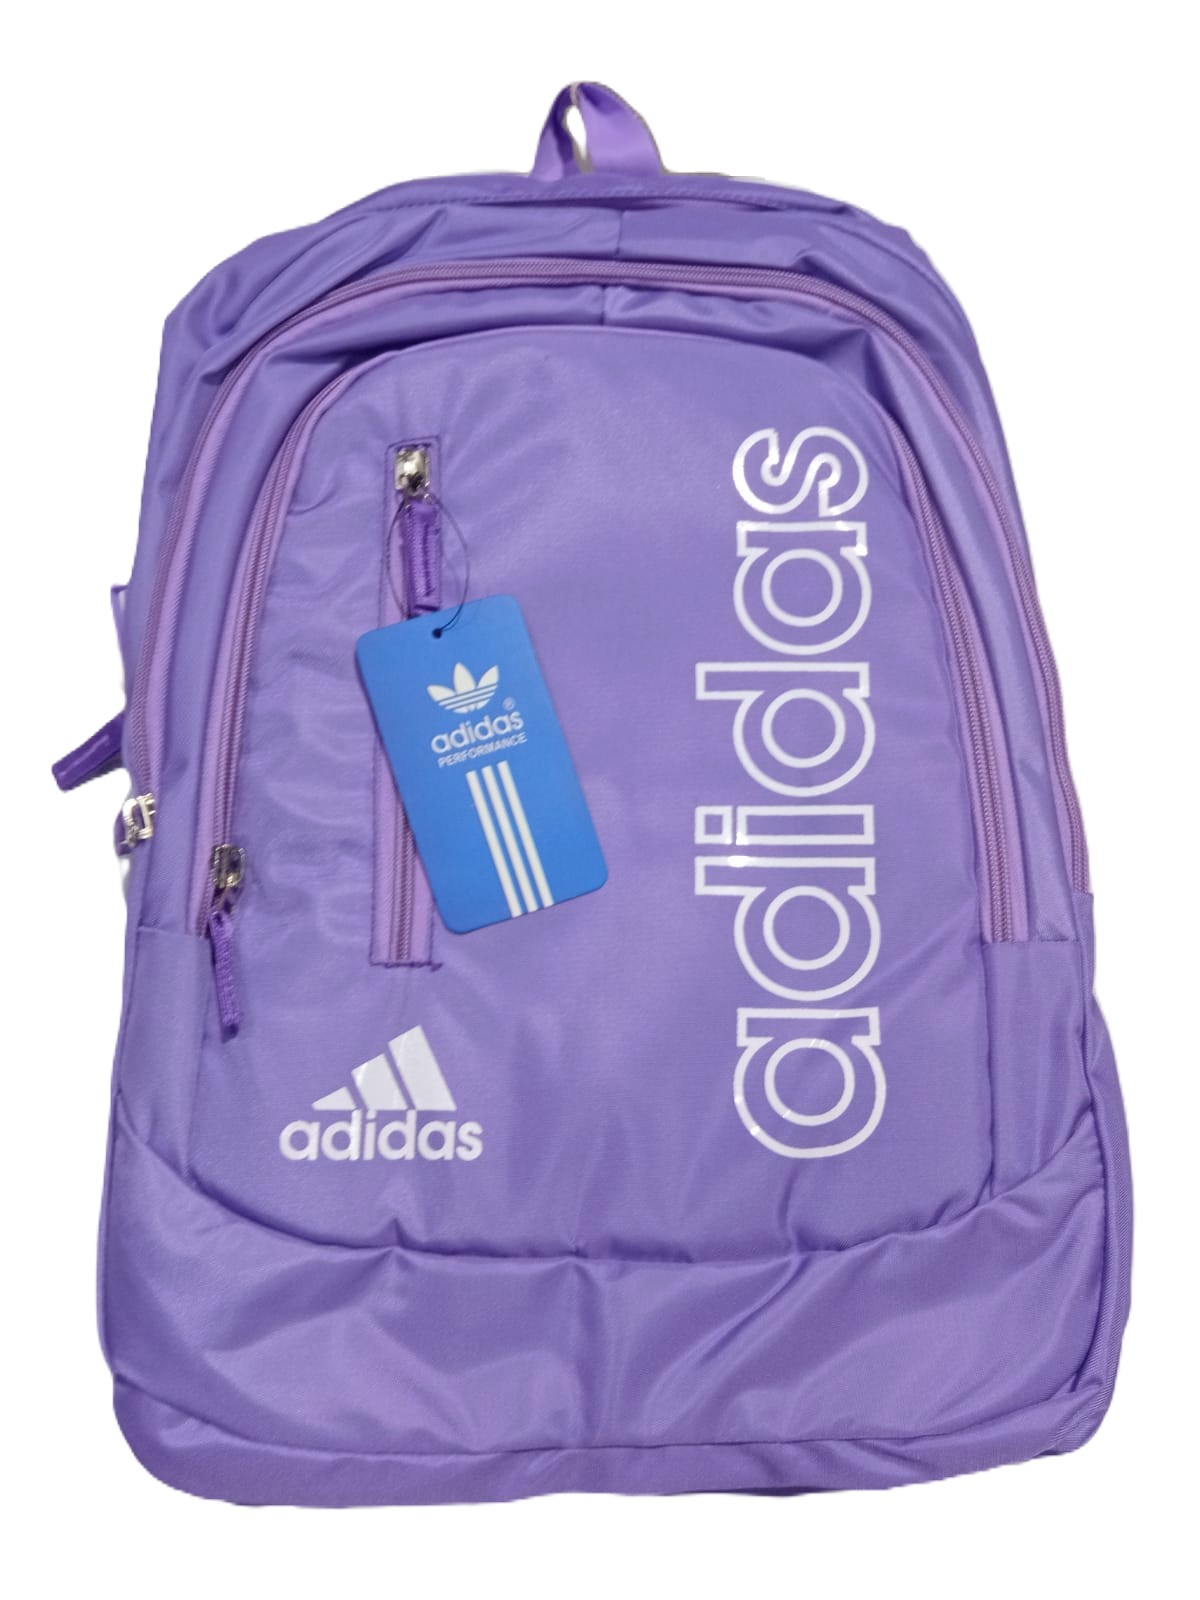 Adidas School Bag (Purple)